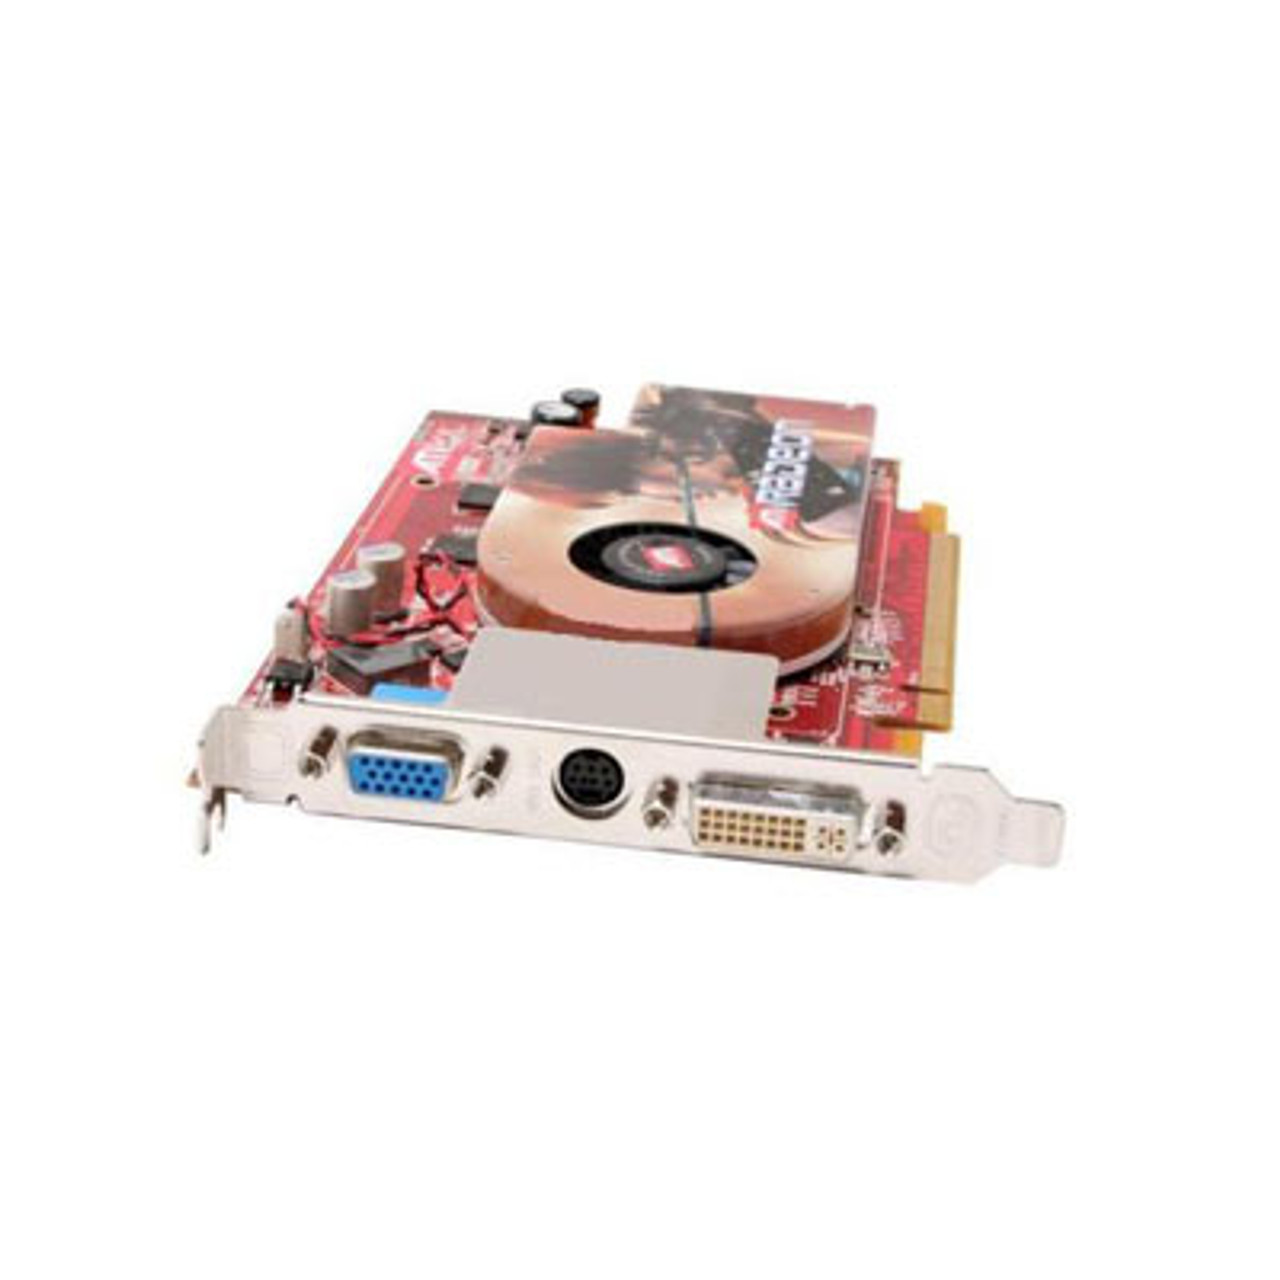 100-437509 - ATI Tech ATI Radeon X1600 Pro 512MB 128-Bit GDDR2 PCI Express x16 DVI/ VGA/ HDTV Video Graphics Card